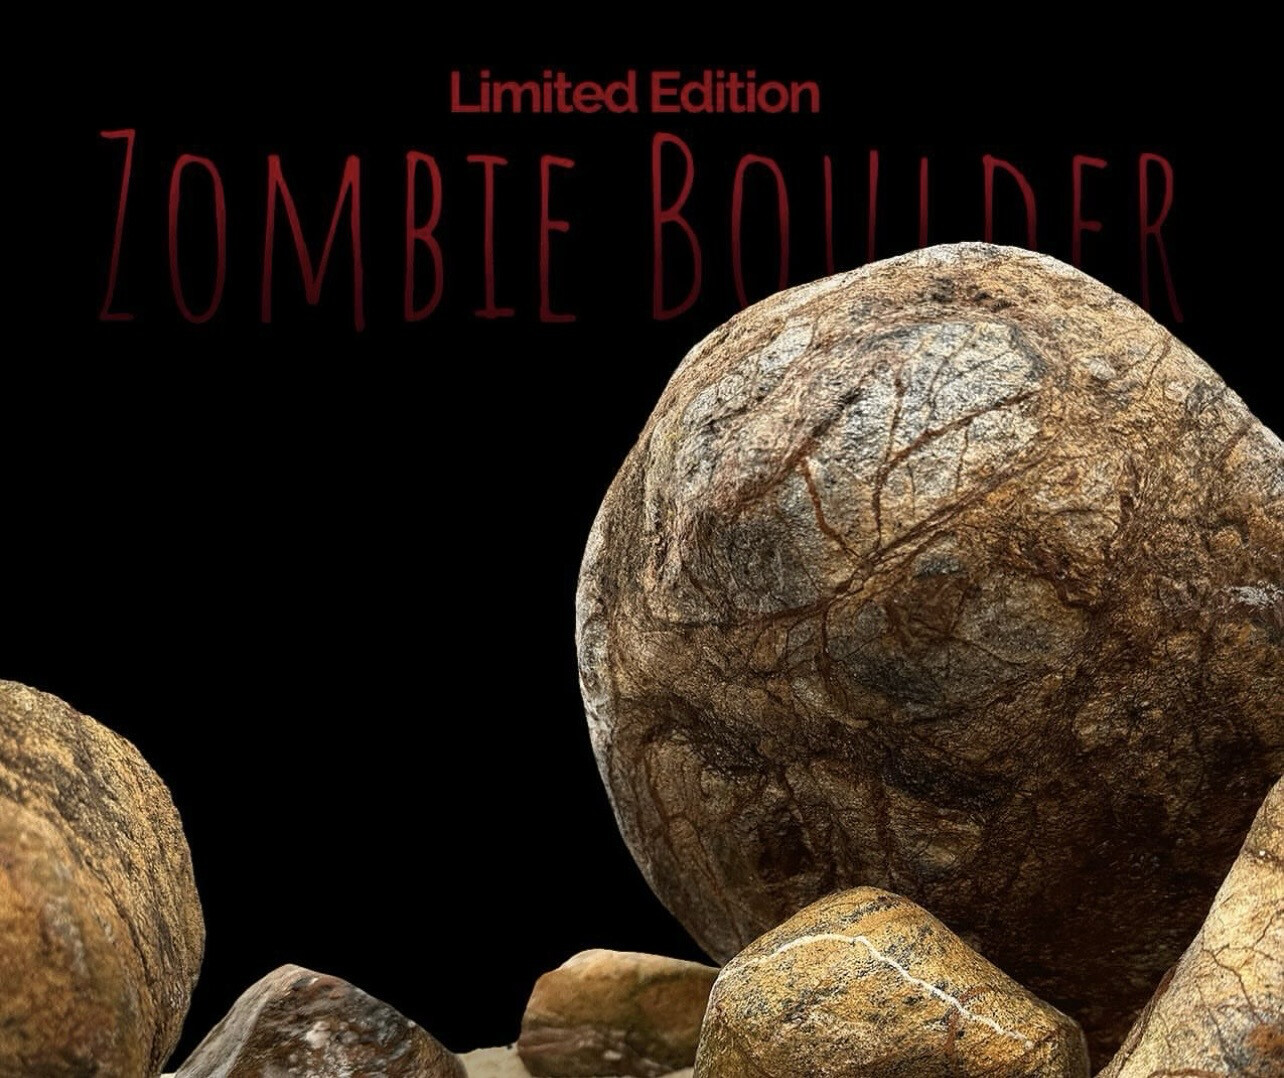 Zombie Boulder mega box